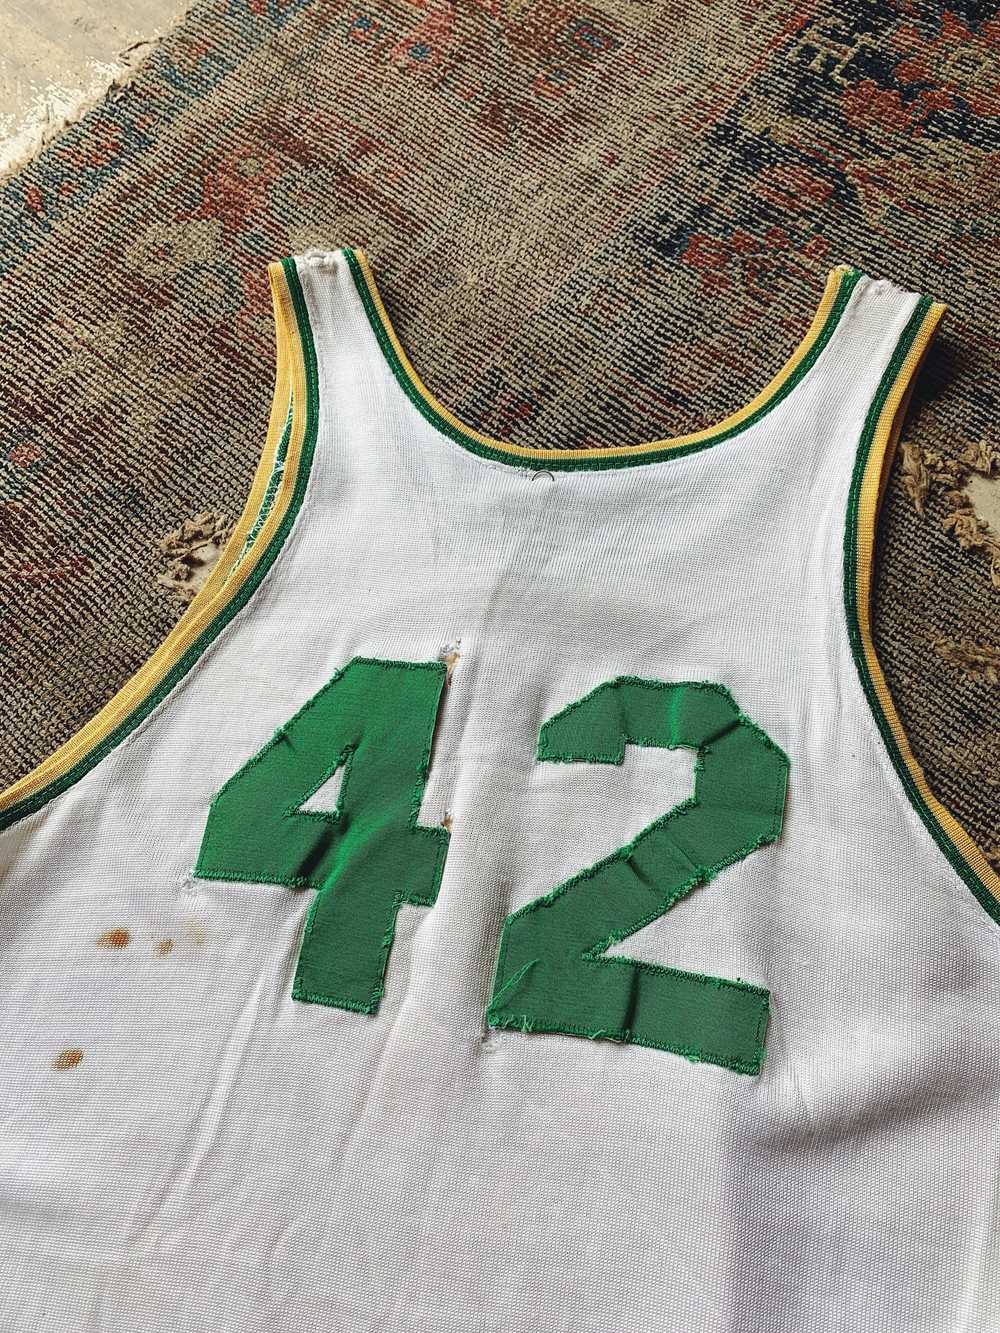 Vintage Rawling’s Brand “42” Basketball Jersey - image 5